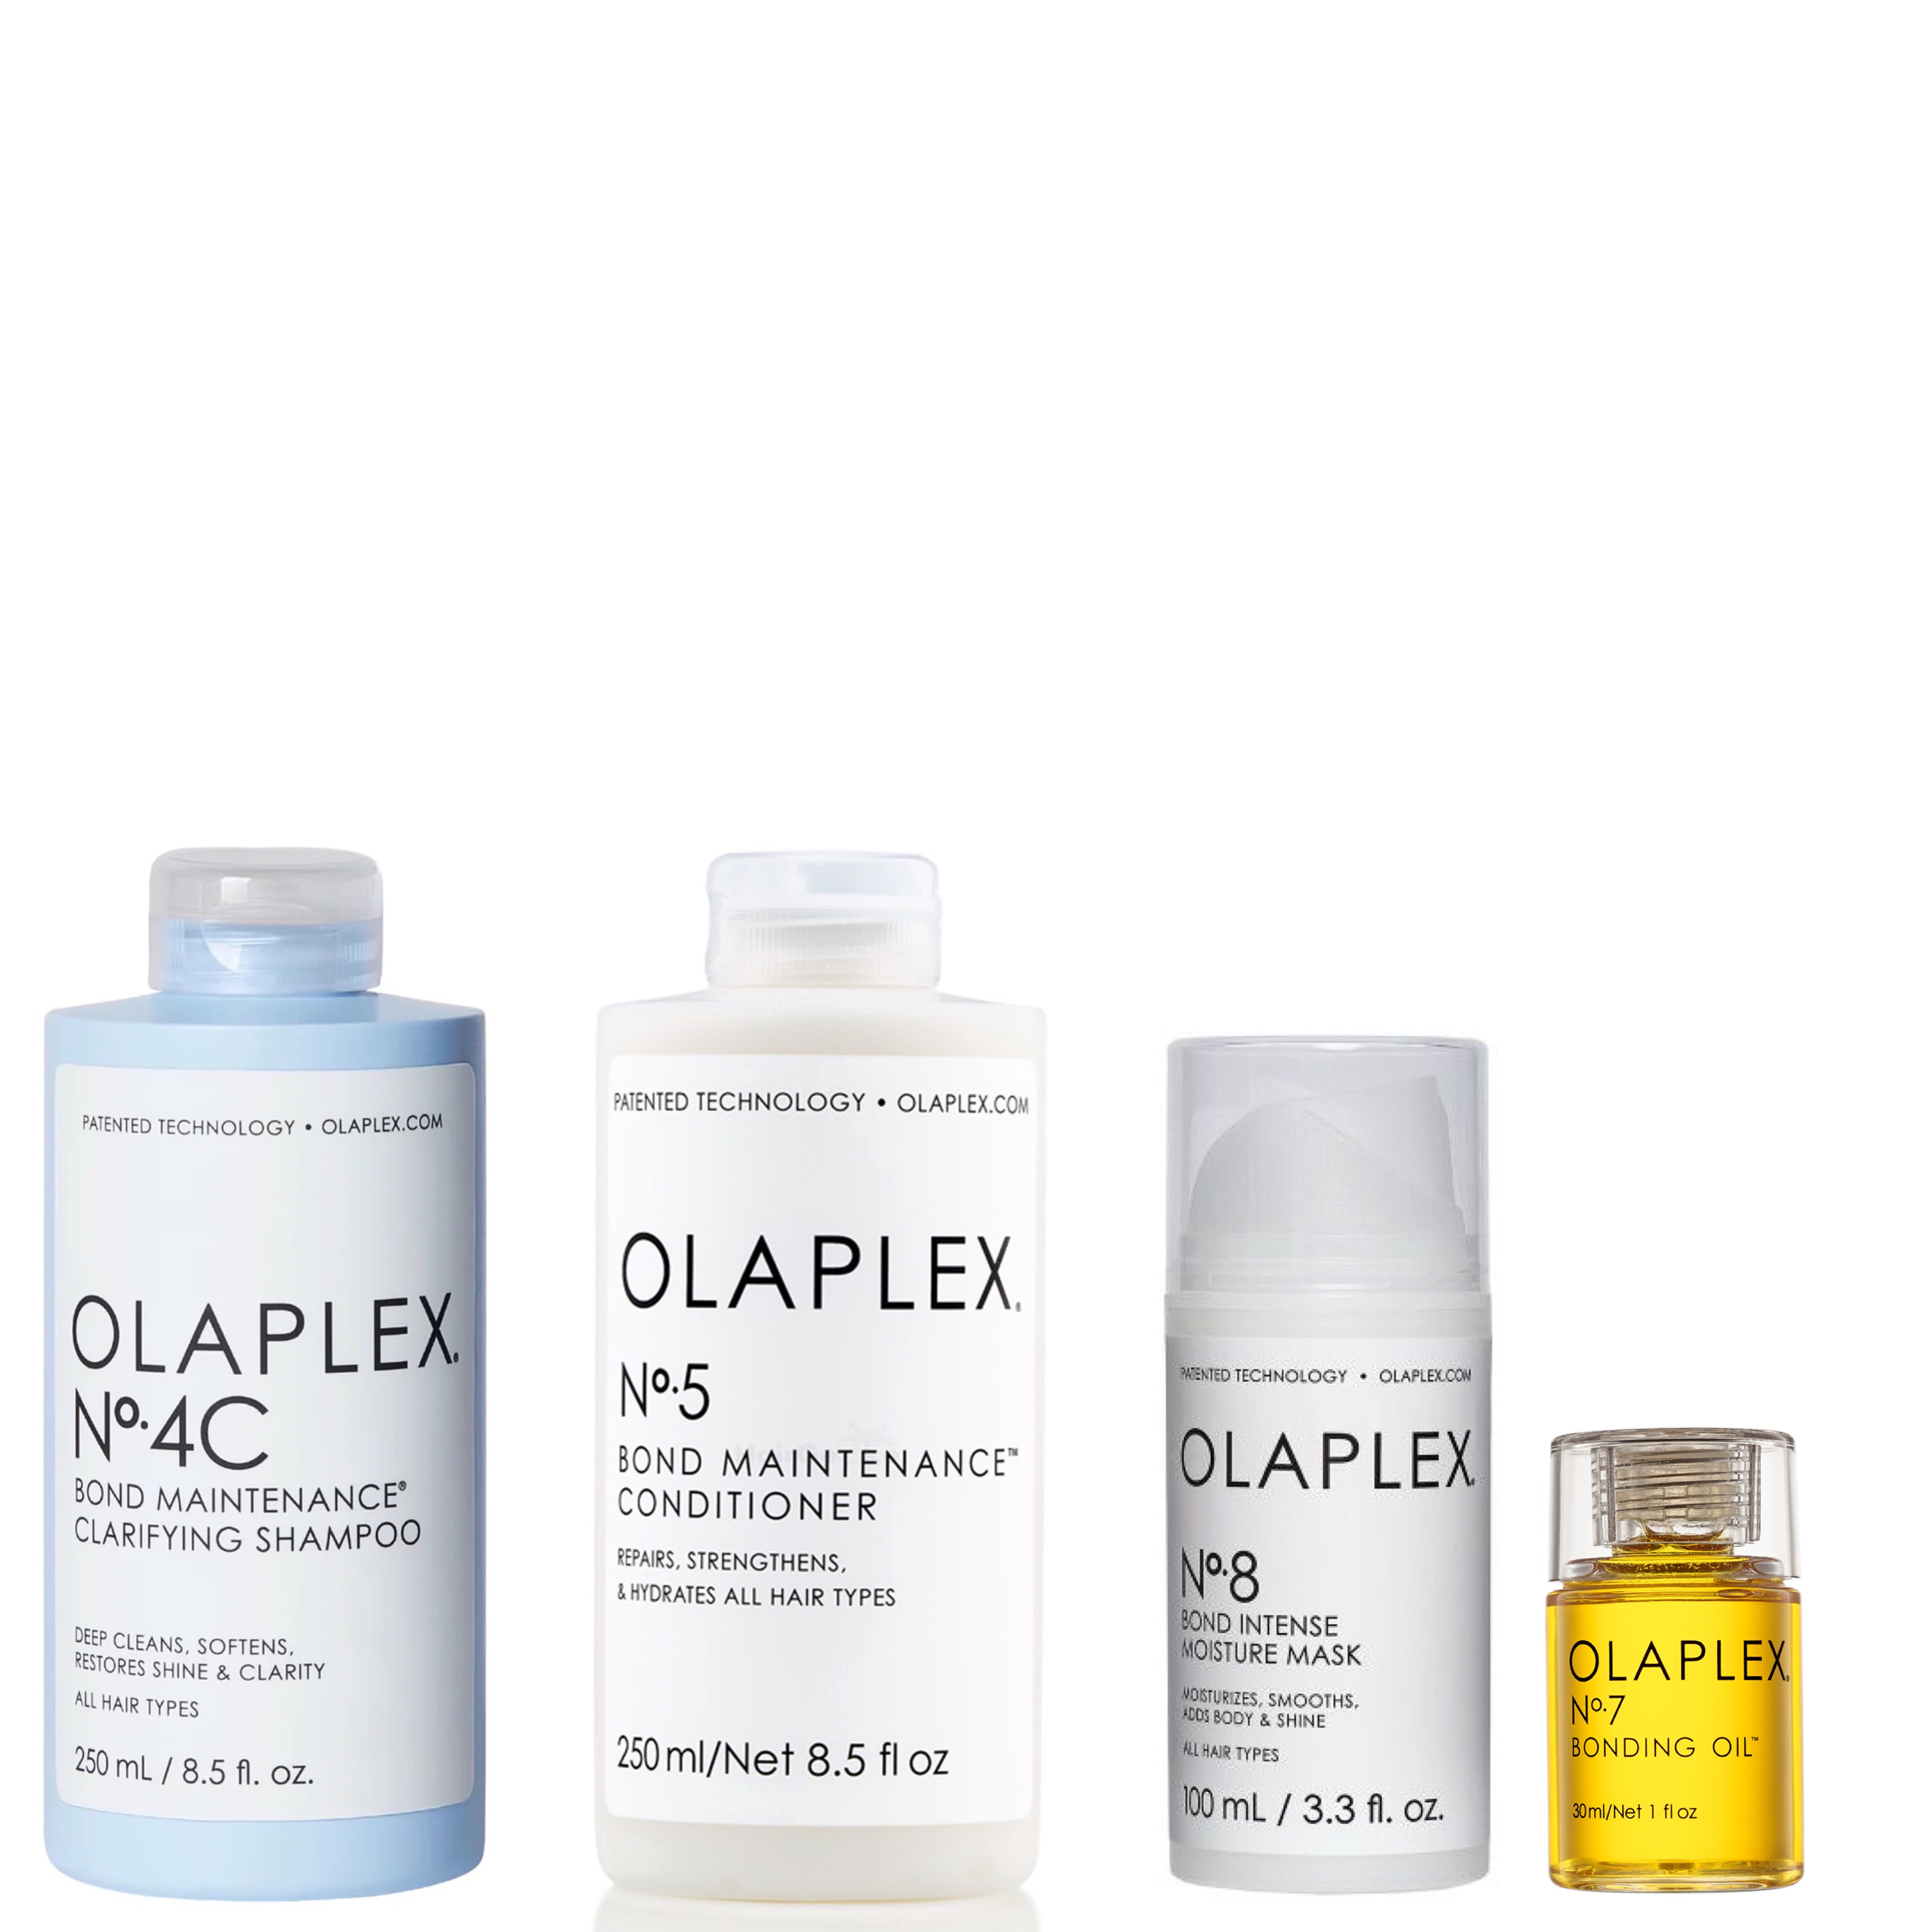 Olaplex Set Neu - No.4C Bond Maintenance Clarifying Shampoo 250 ml + No.5 Bond Maintenance Conditioner 250 ml + No.8 Bond Intense Moisture Mask 100 ml + No.7 Bonding Oil 30 ml